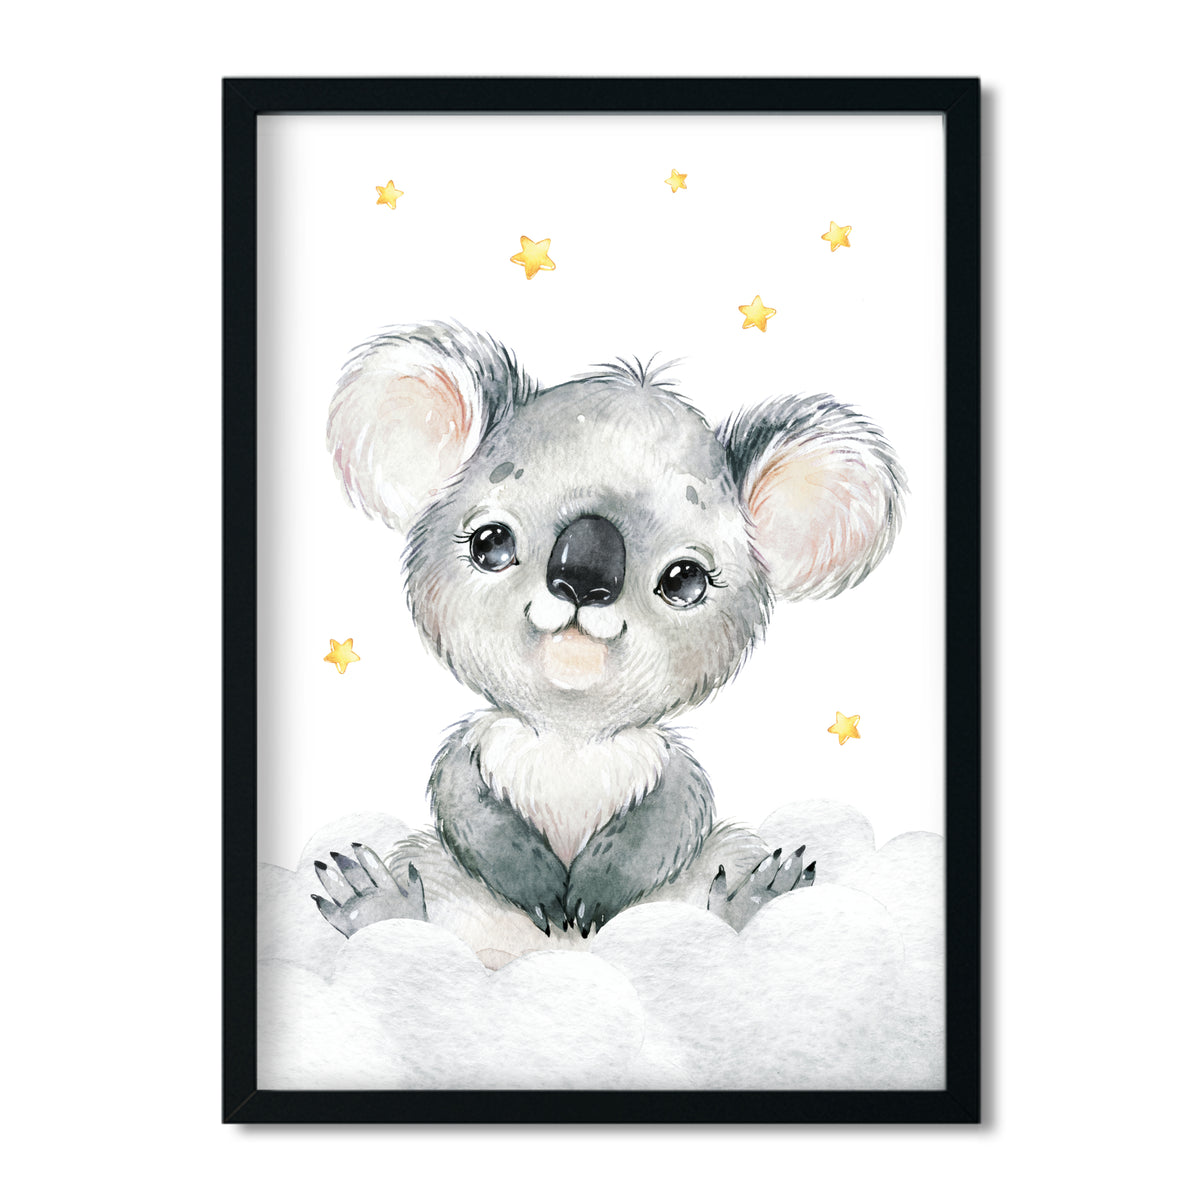 Poster Kinderzimmer - Kleiner Koala - Safari Tiere - A4 / A3